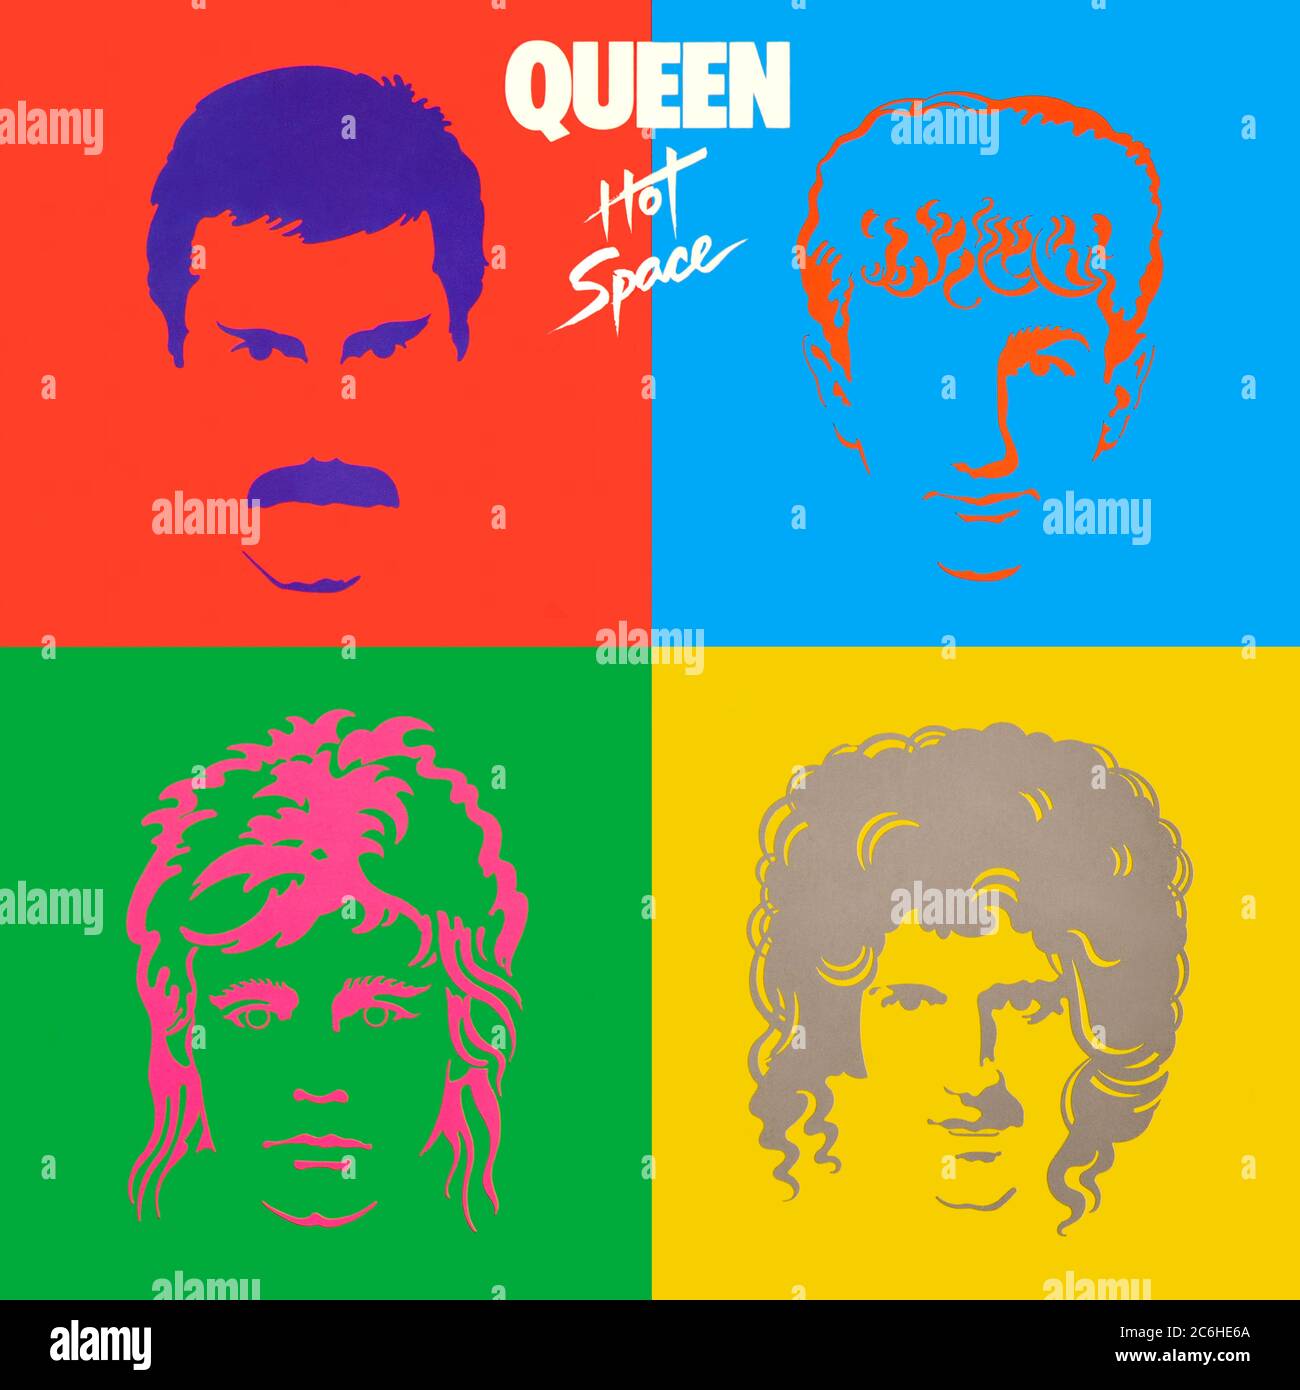 Queen - copertina originale in vinile - Hot Space - 1982 Foto stock - Alamy